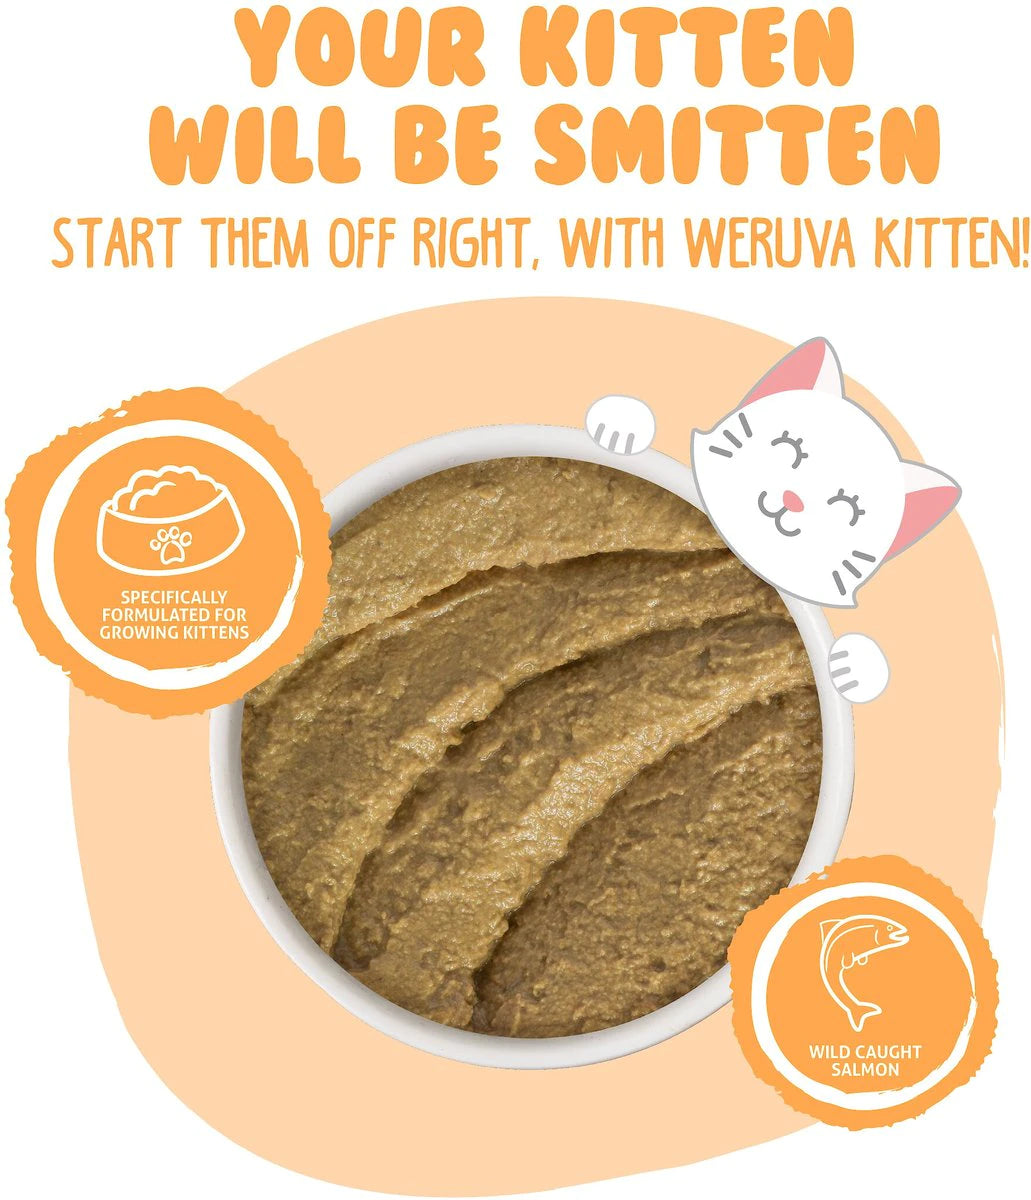 Weruva Tuna & Salmon Formula in a Hydrating Puree Wet Cat Food, 3-oz